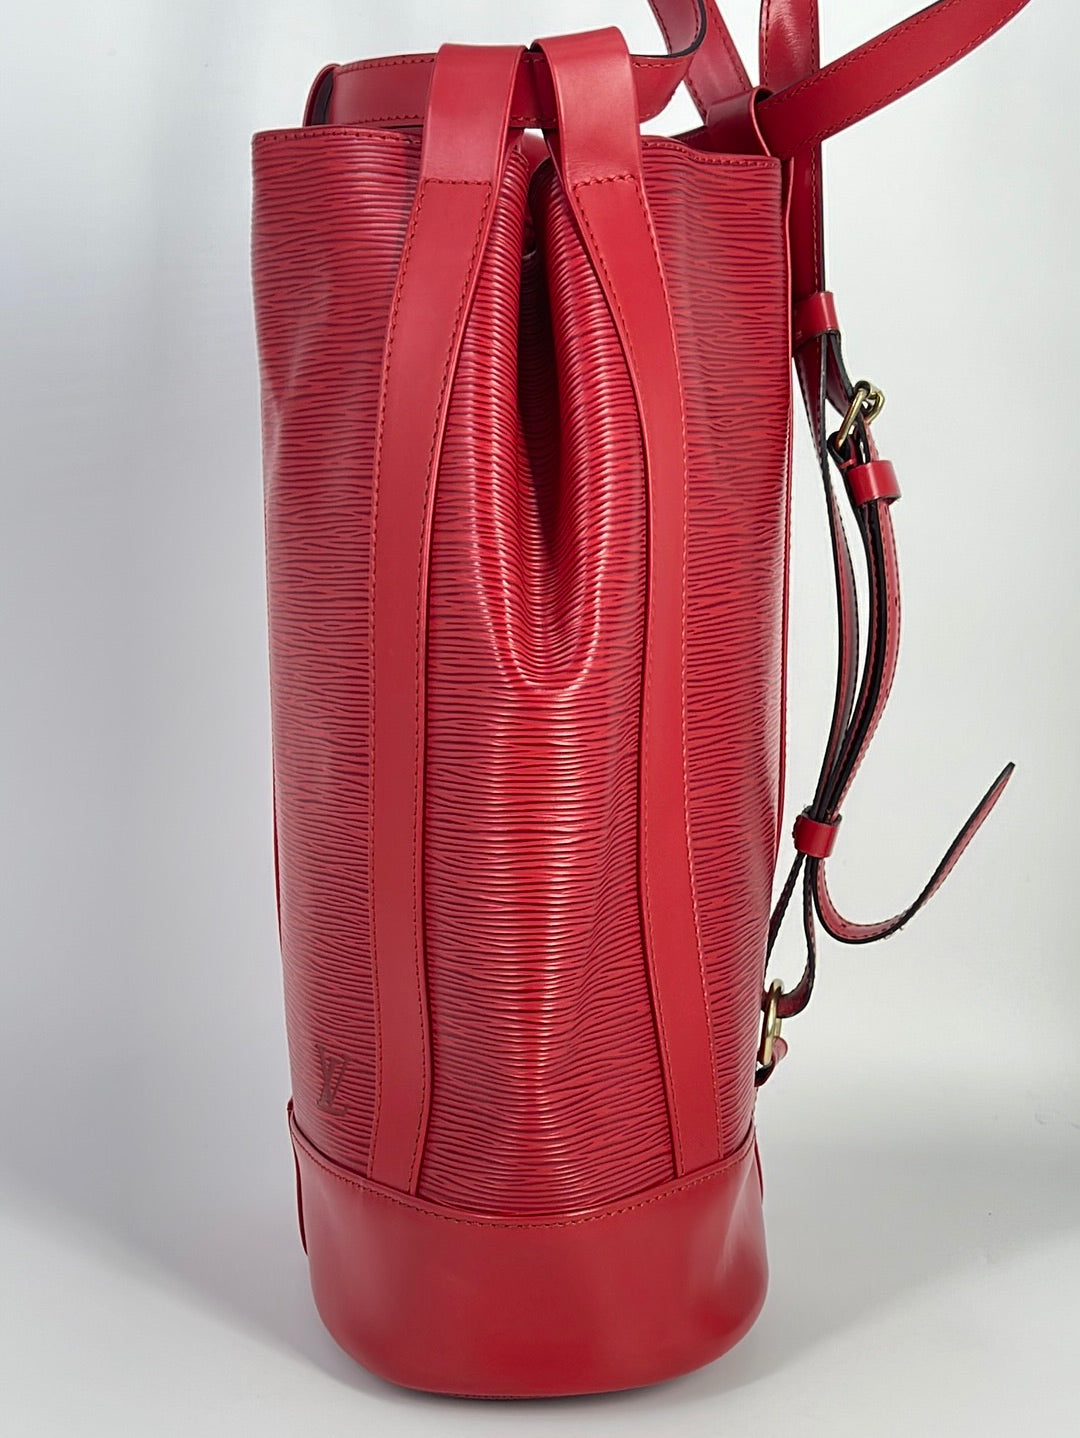 Vintage Louis Vuitton Bucket Noe Gm Tote Red Black Epi Leather